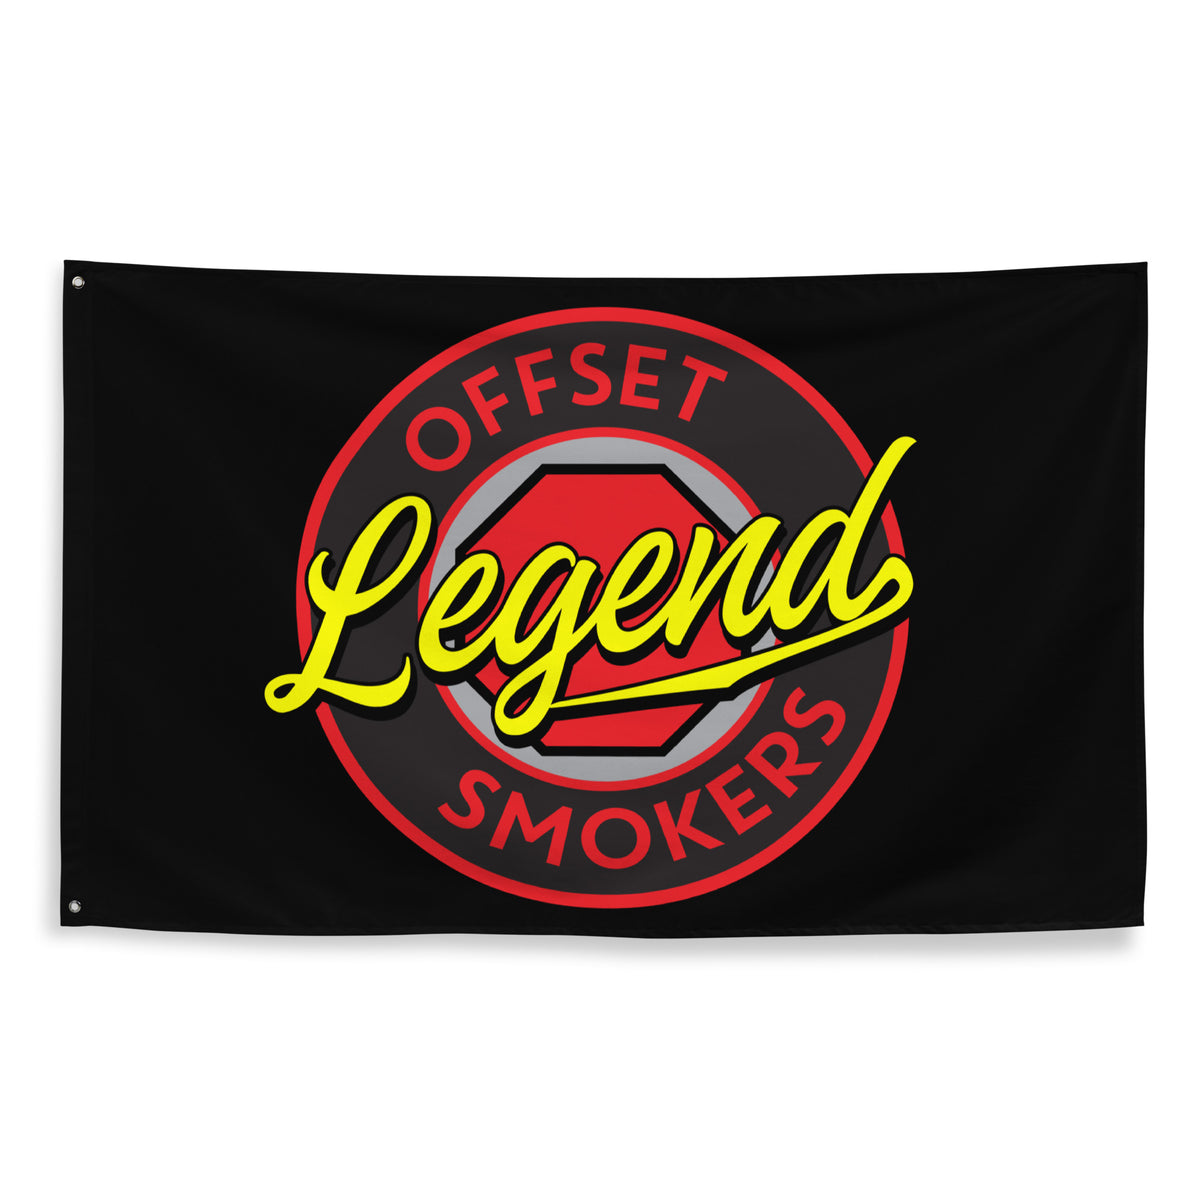 Legend Smokers Flag